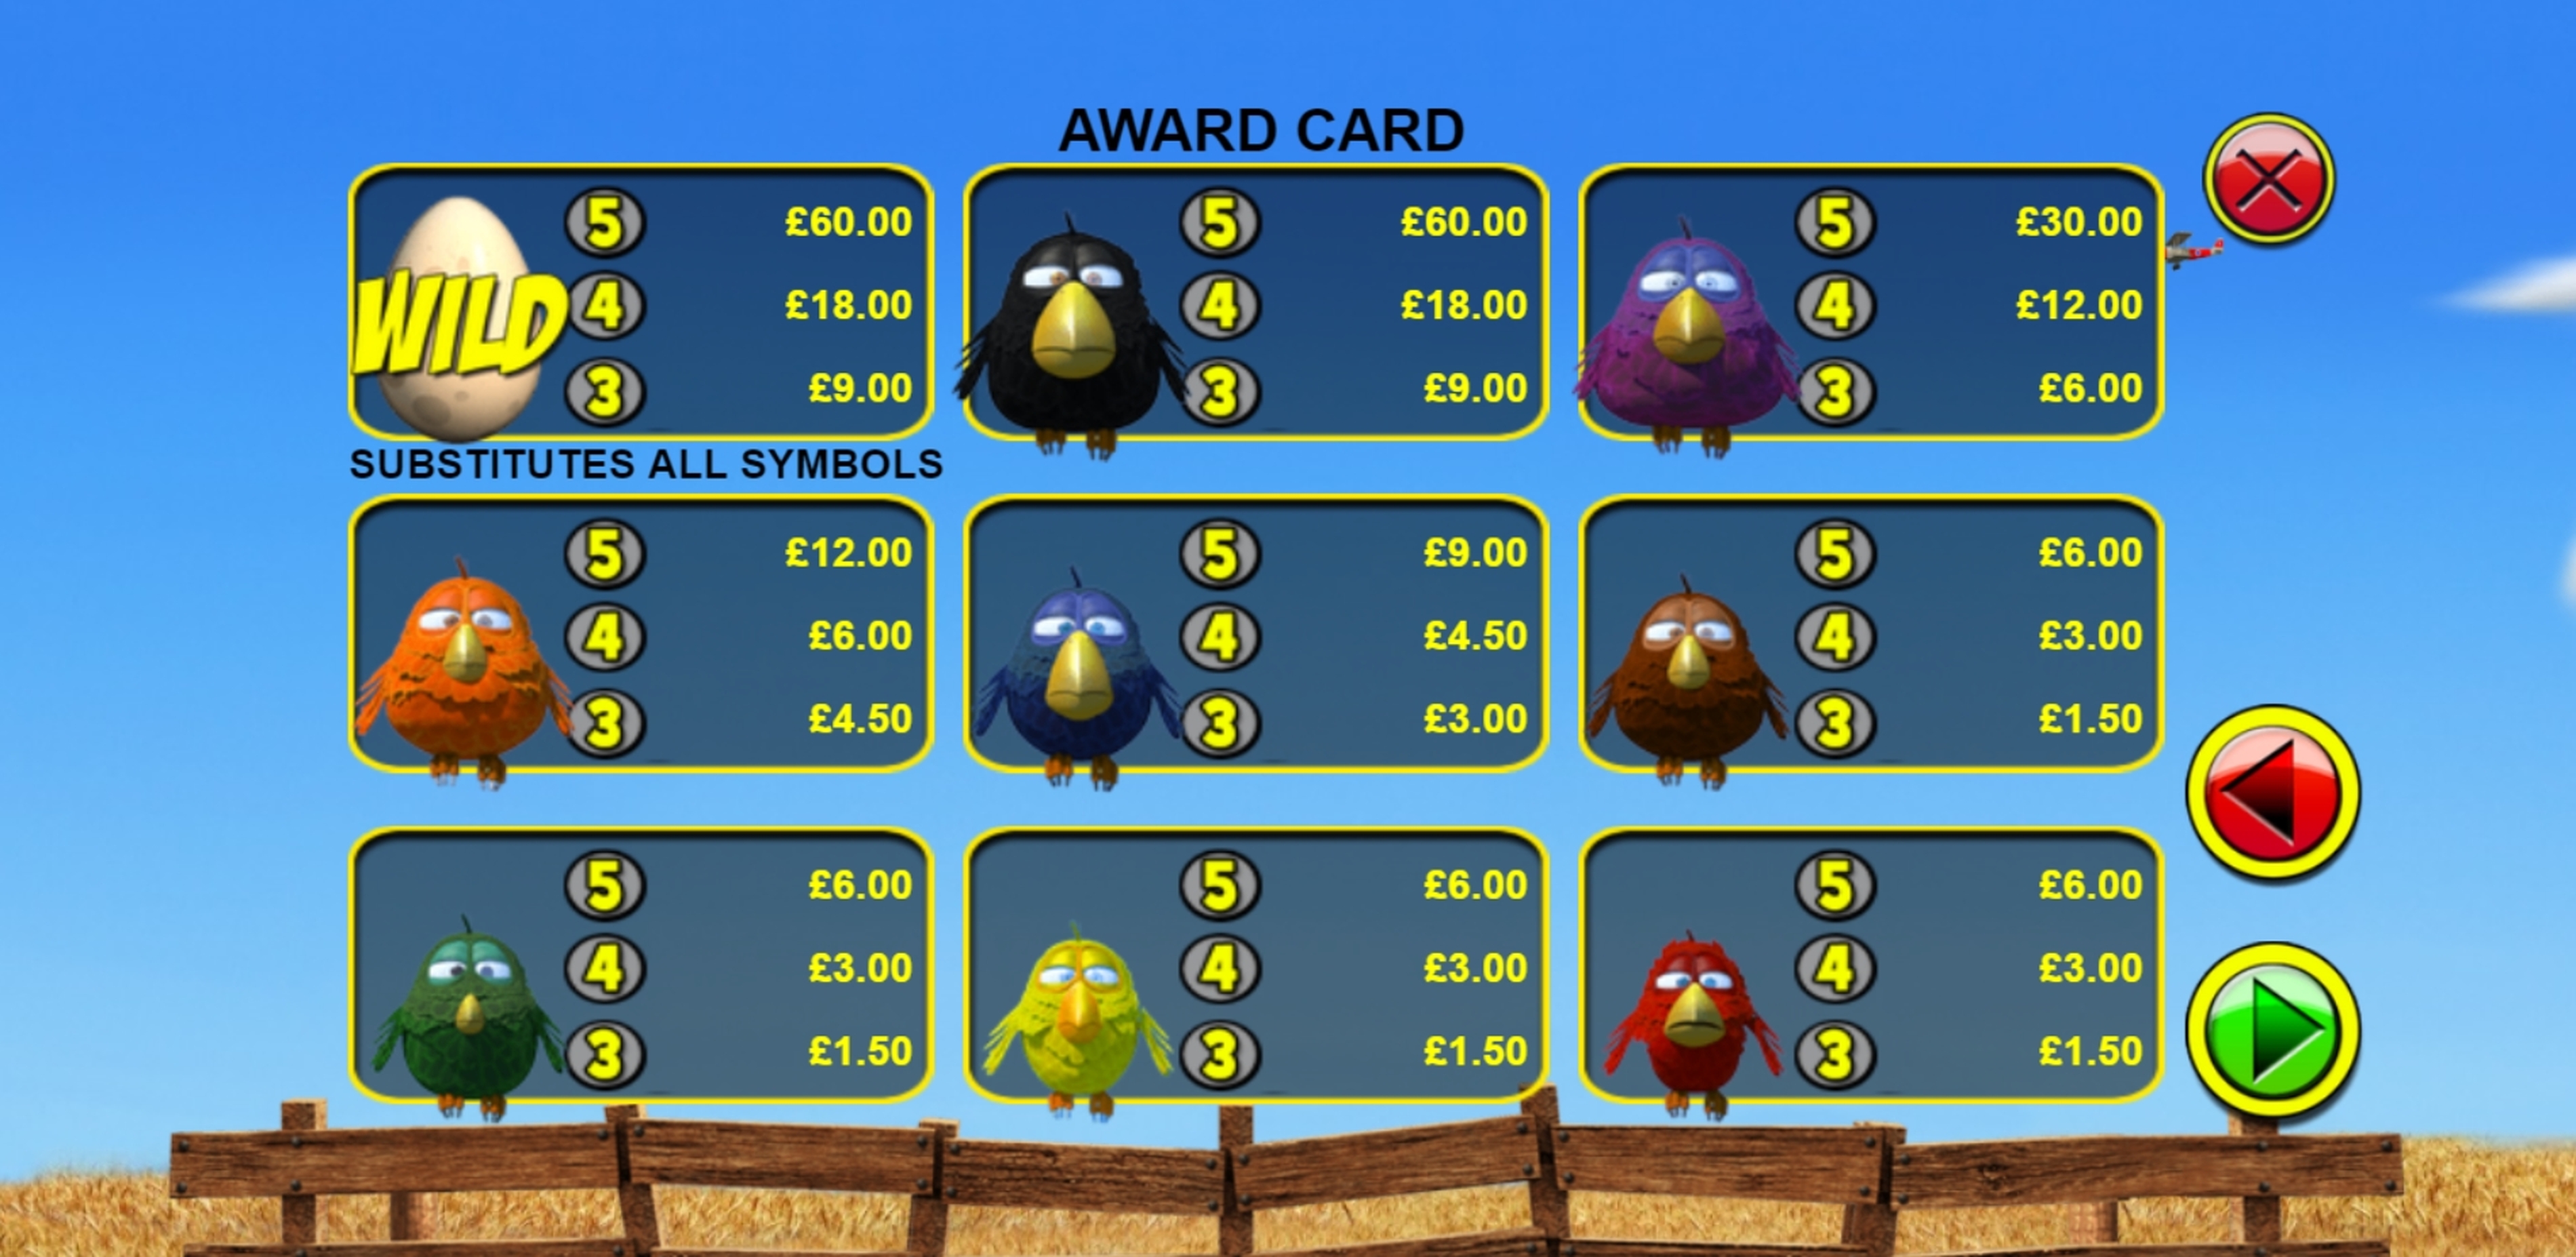 Info of Birdz Slot Game by Games Warehouse